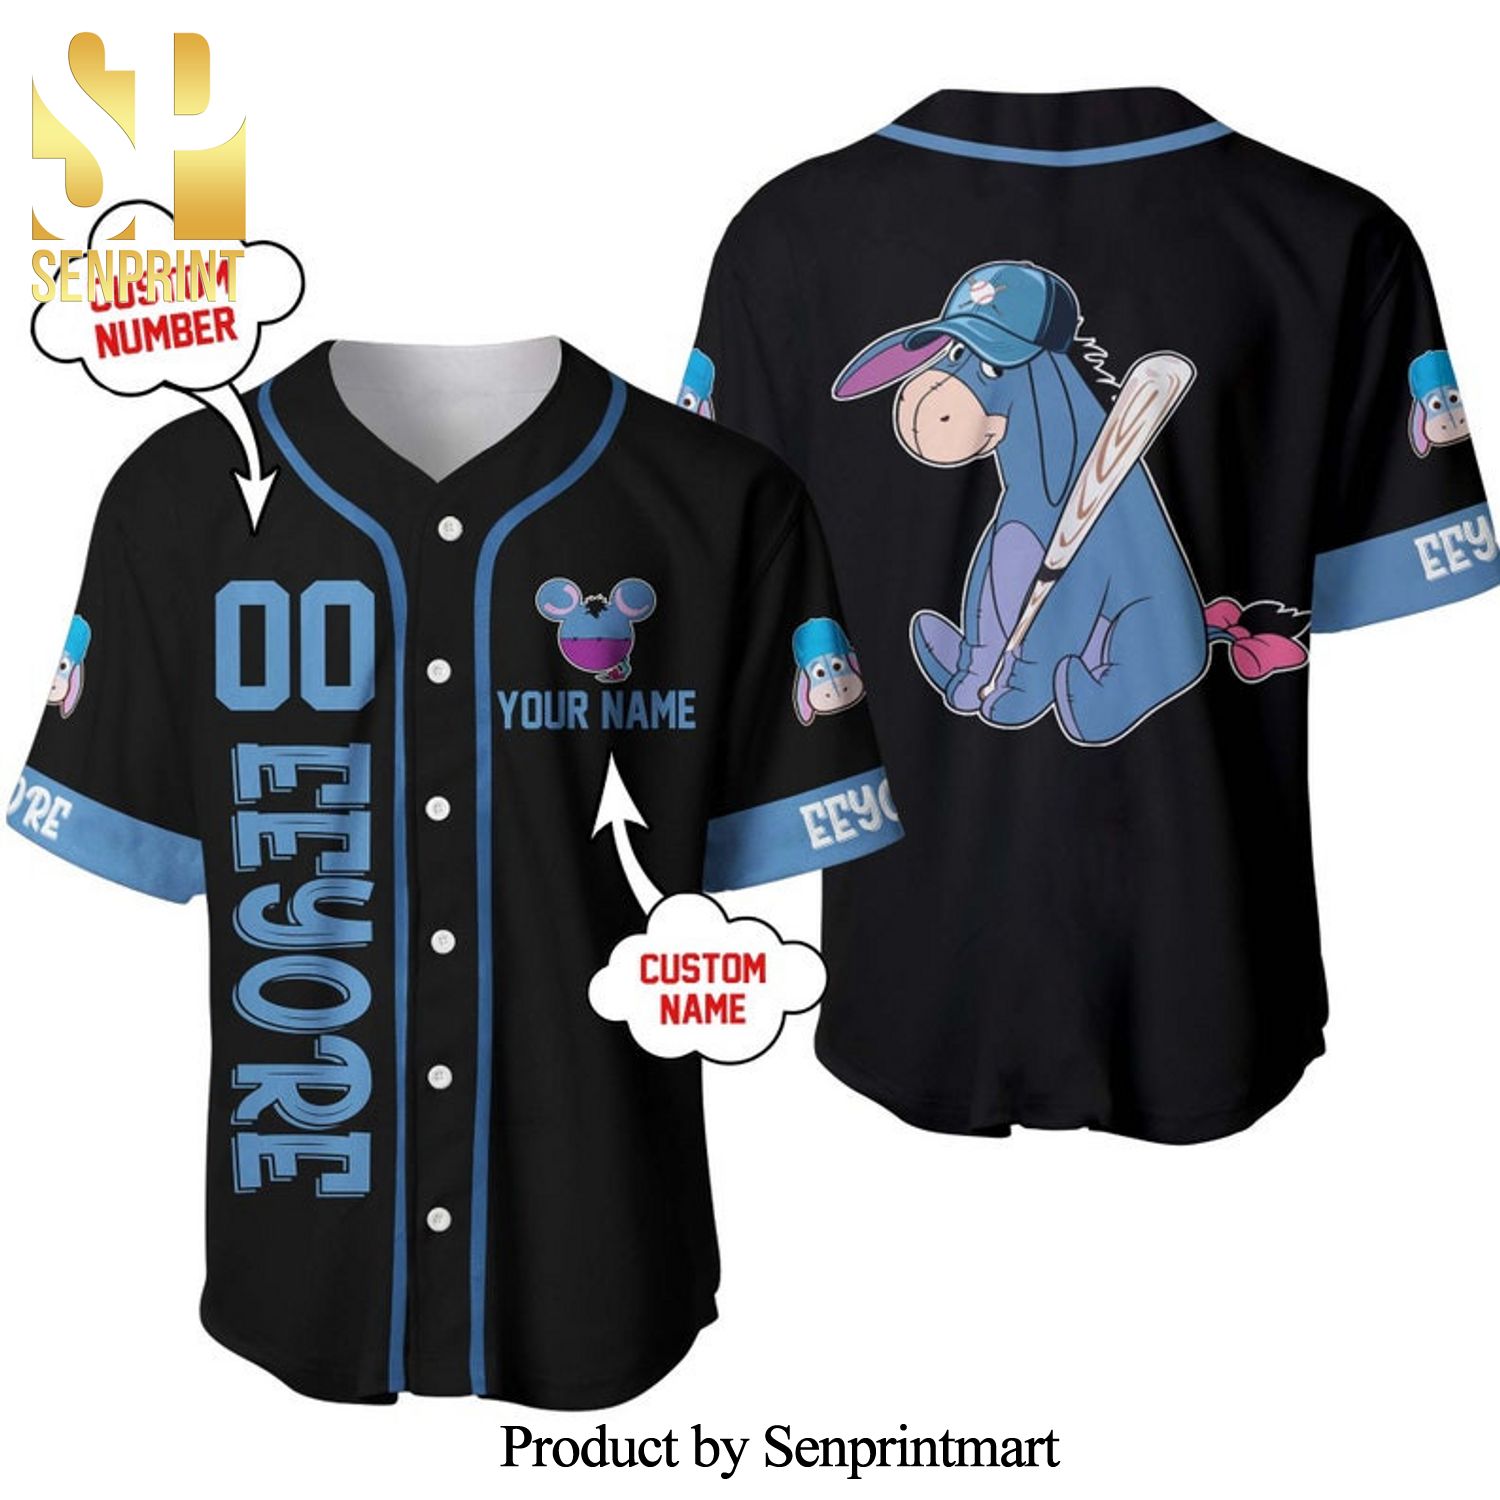 Personalized Eeyore Disney Playing Baseball All Over Print Baseball Jersey – Black